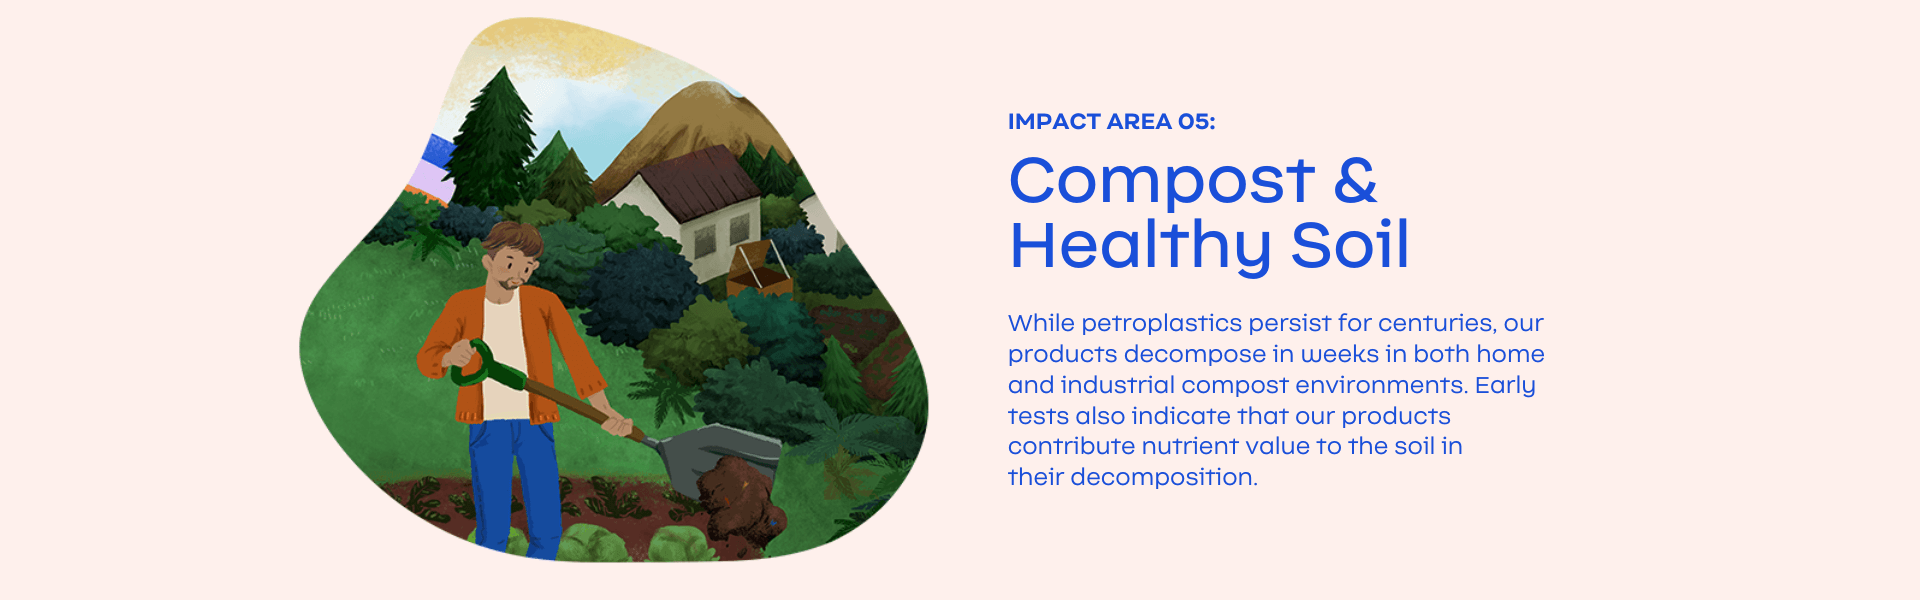 Impact-Slide-5_Compost-Healthy-Soil